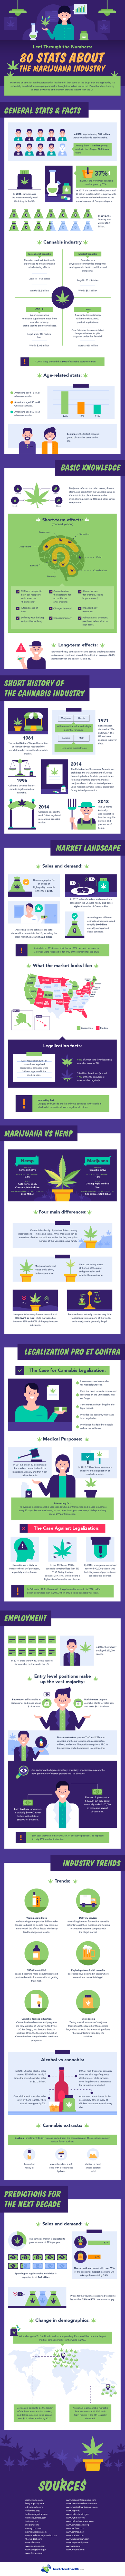 Marijuana Statistics Infographic